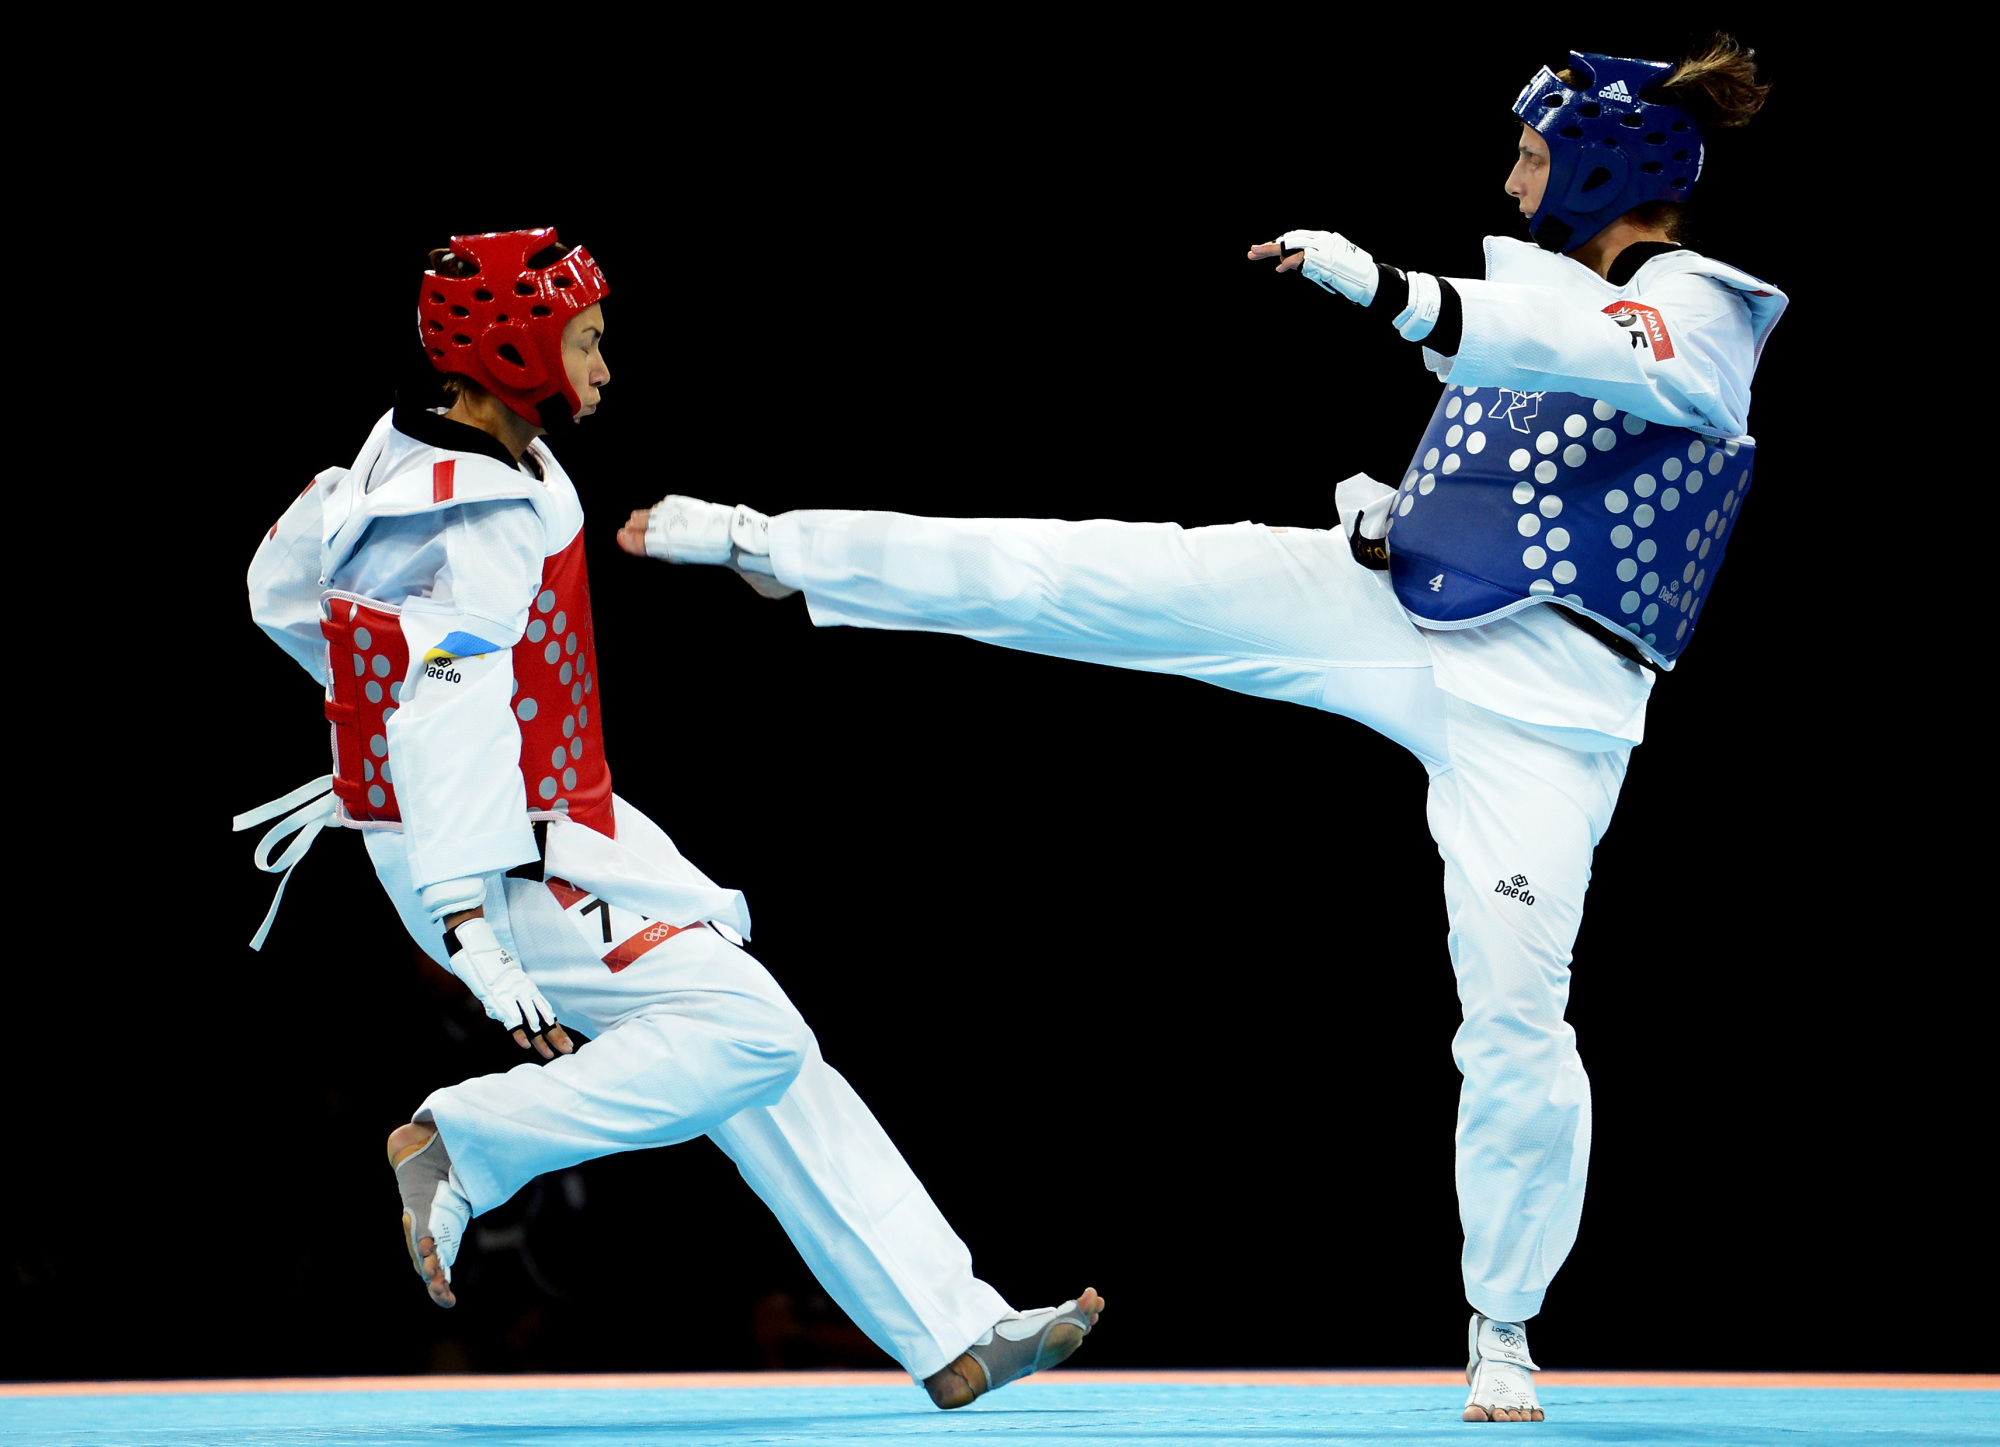 Why Is Taekwondo Good For Everyday Self-Defense?